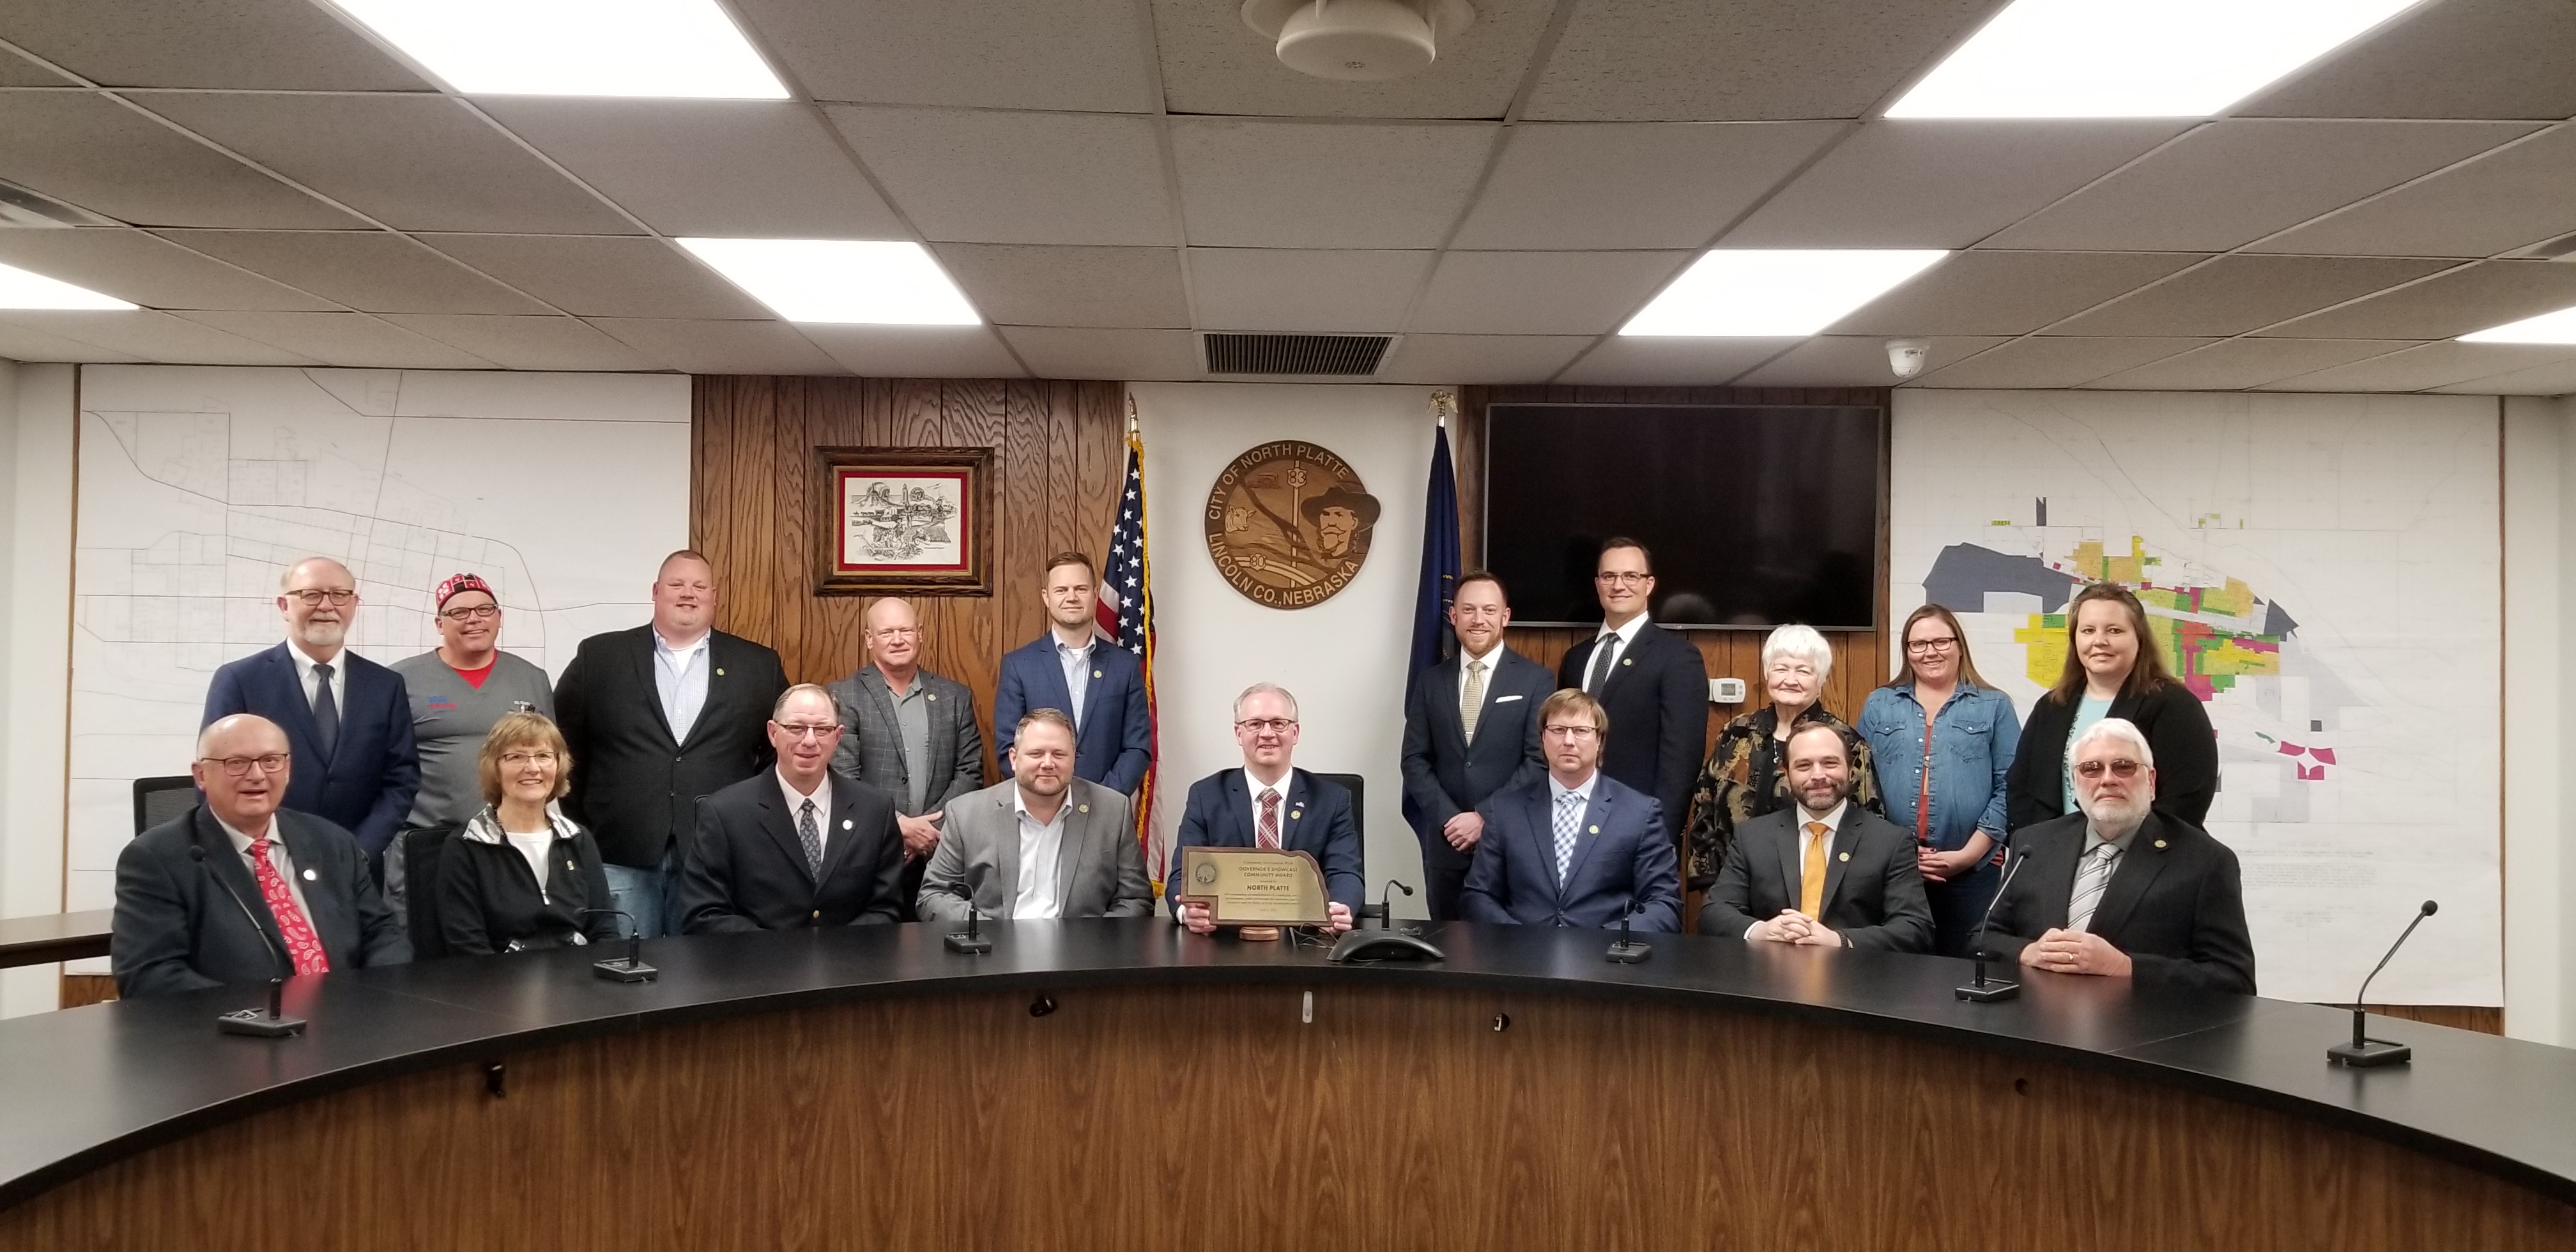 North Platte wins Governor's Showcase Community Award for outstanding economic development